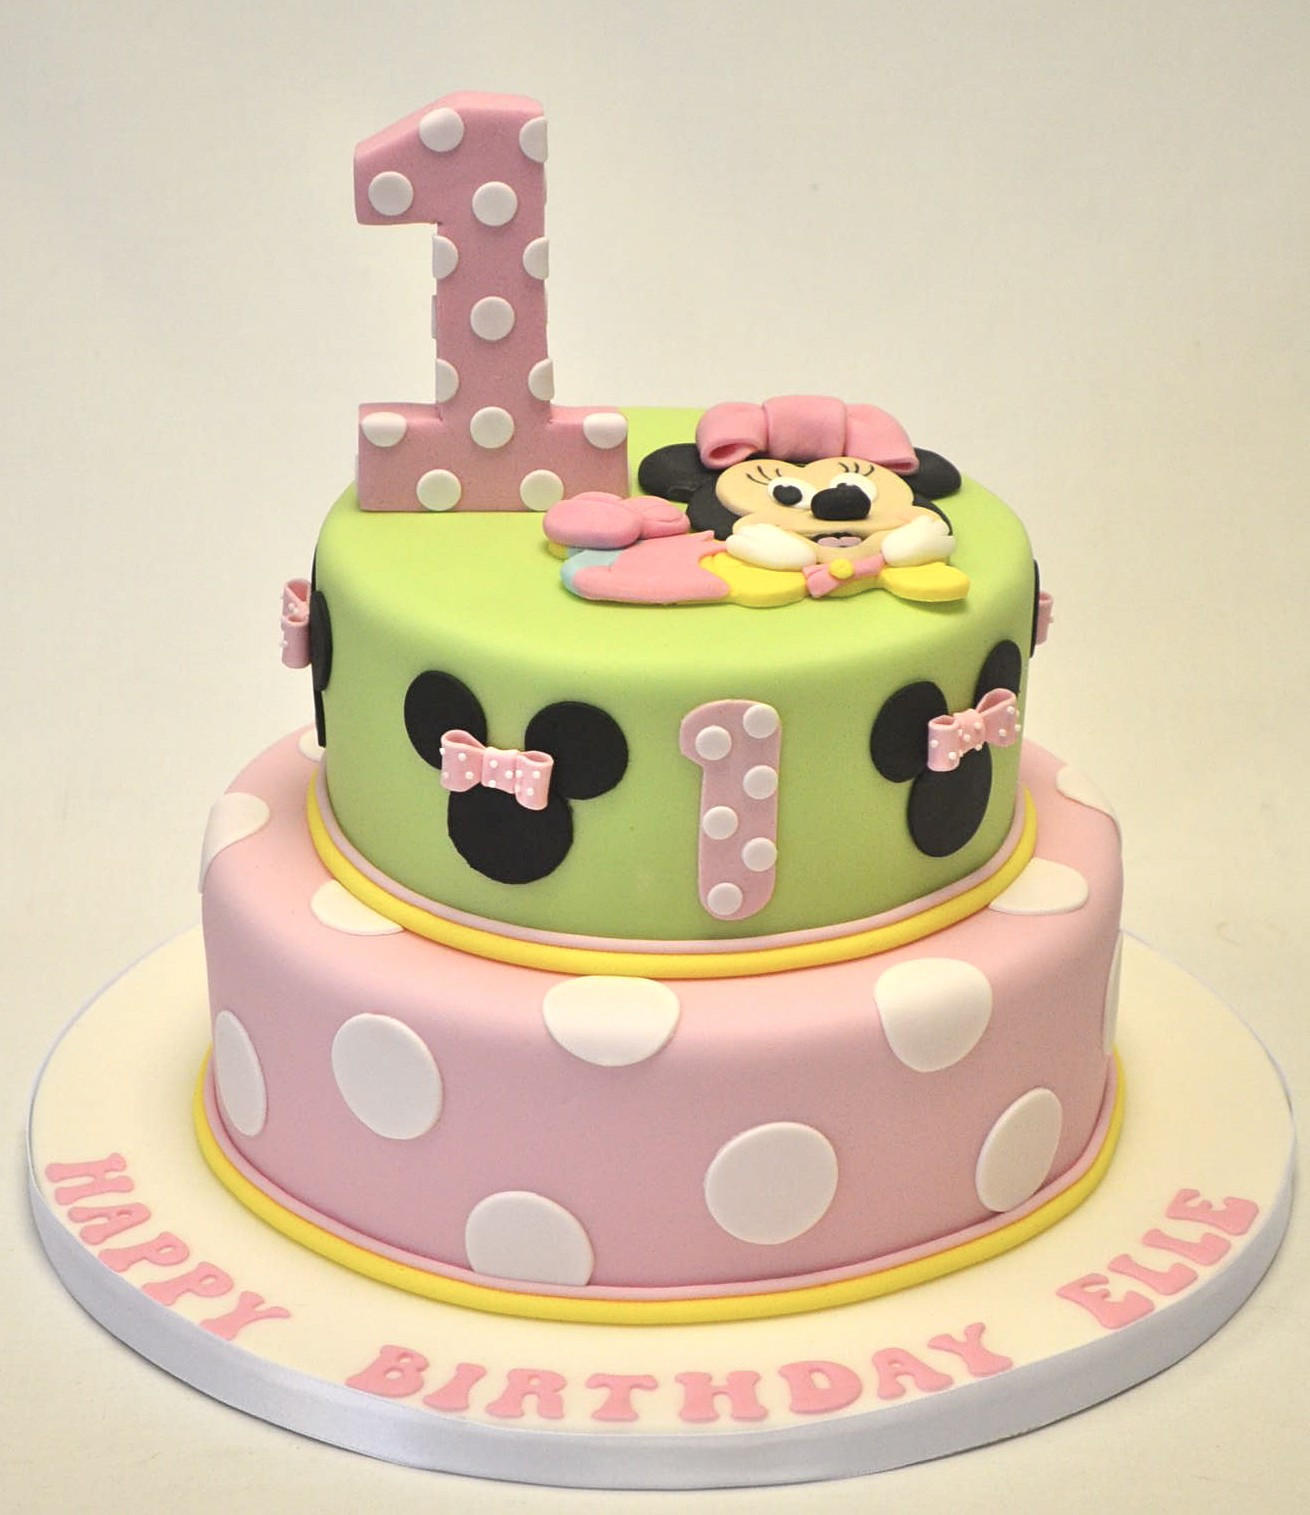 Minnie Mouse Birthday Cake
 2 Tier Baby Minnie Mouse Cake Children s Birthday Cakes